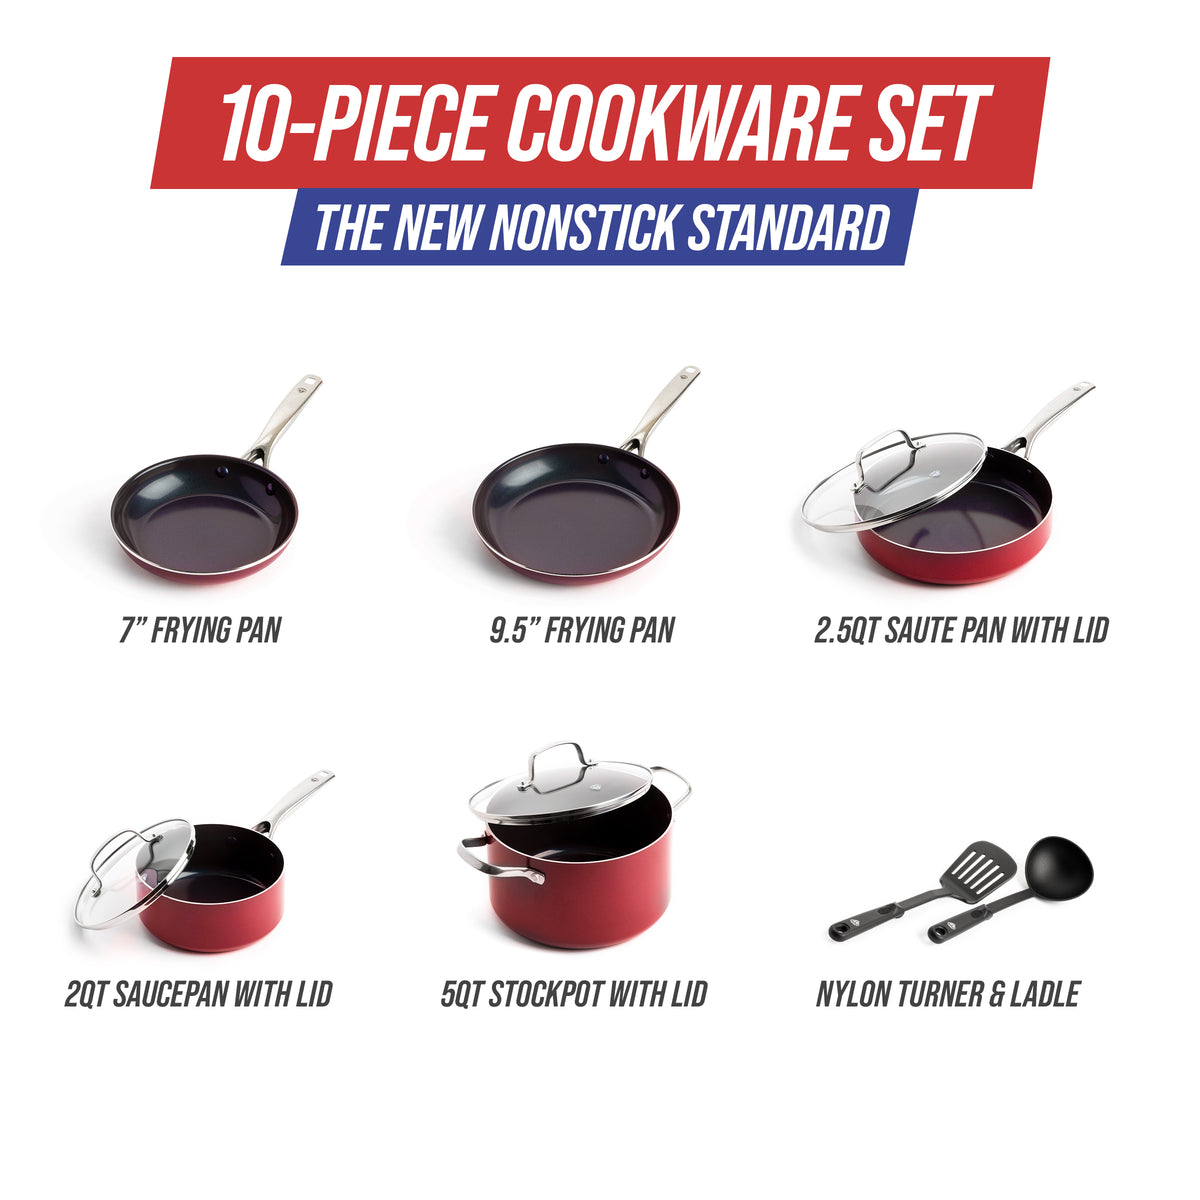 7-Piece Aluminum Nonstick Cookware Set in Red